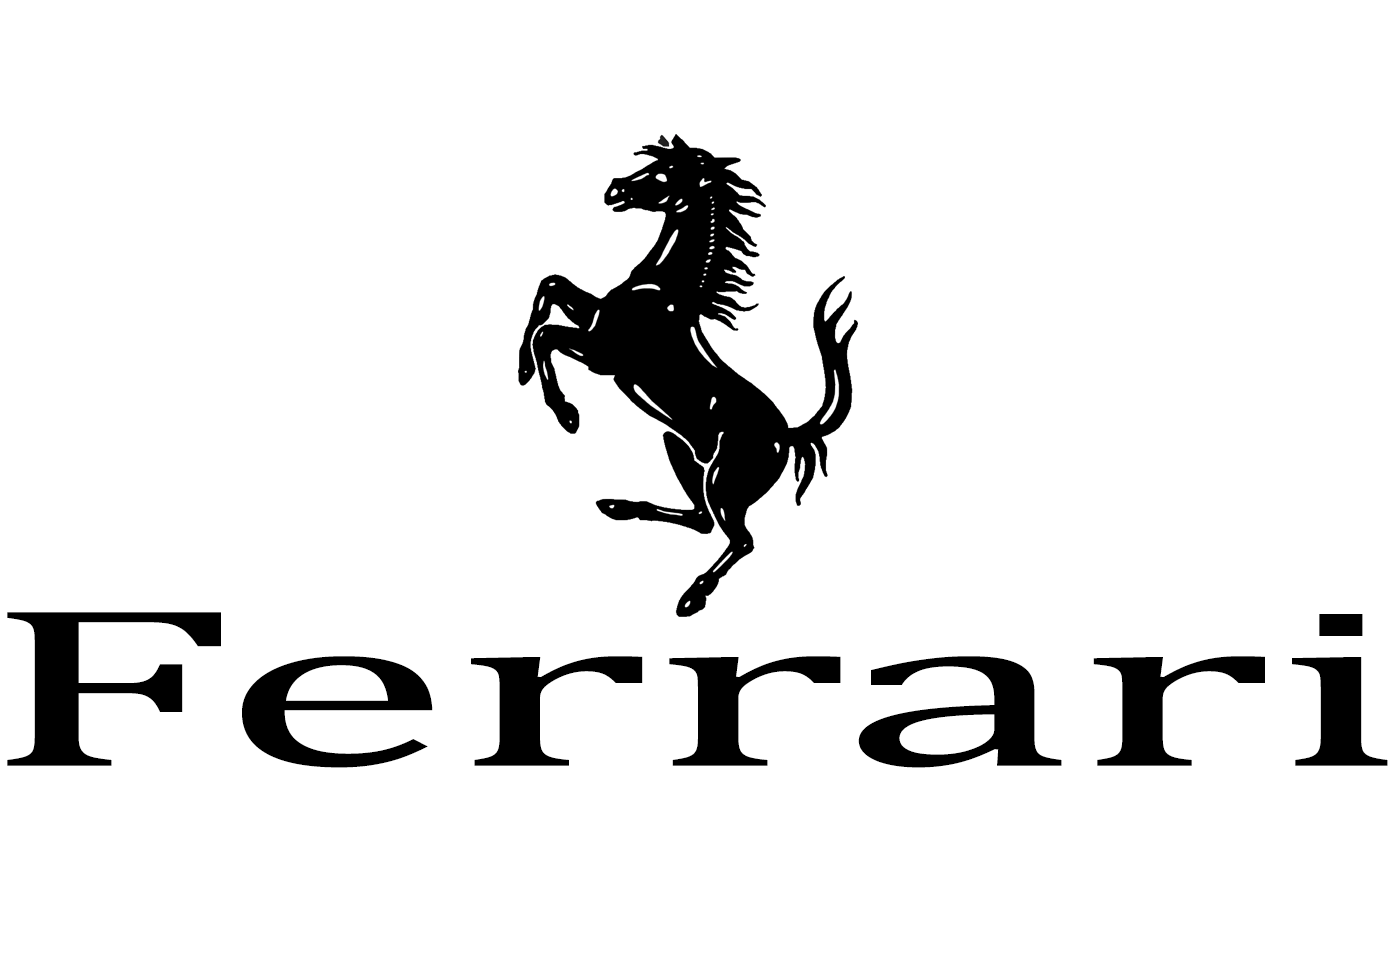 Les concessionnaires Ferrari